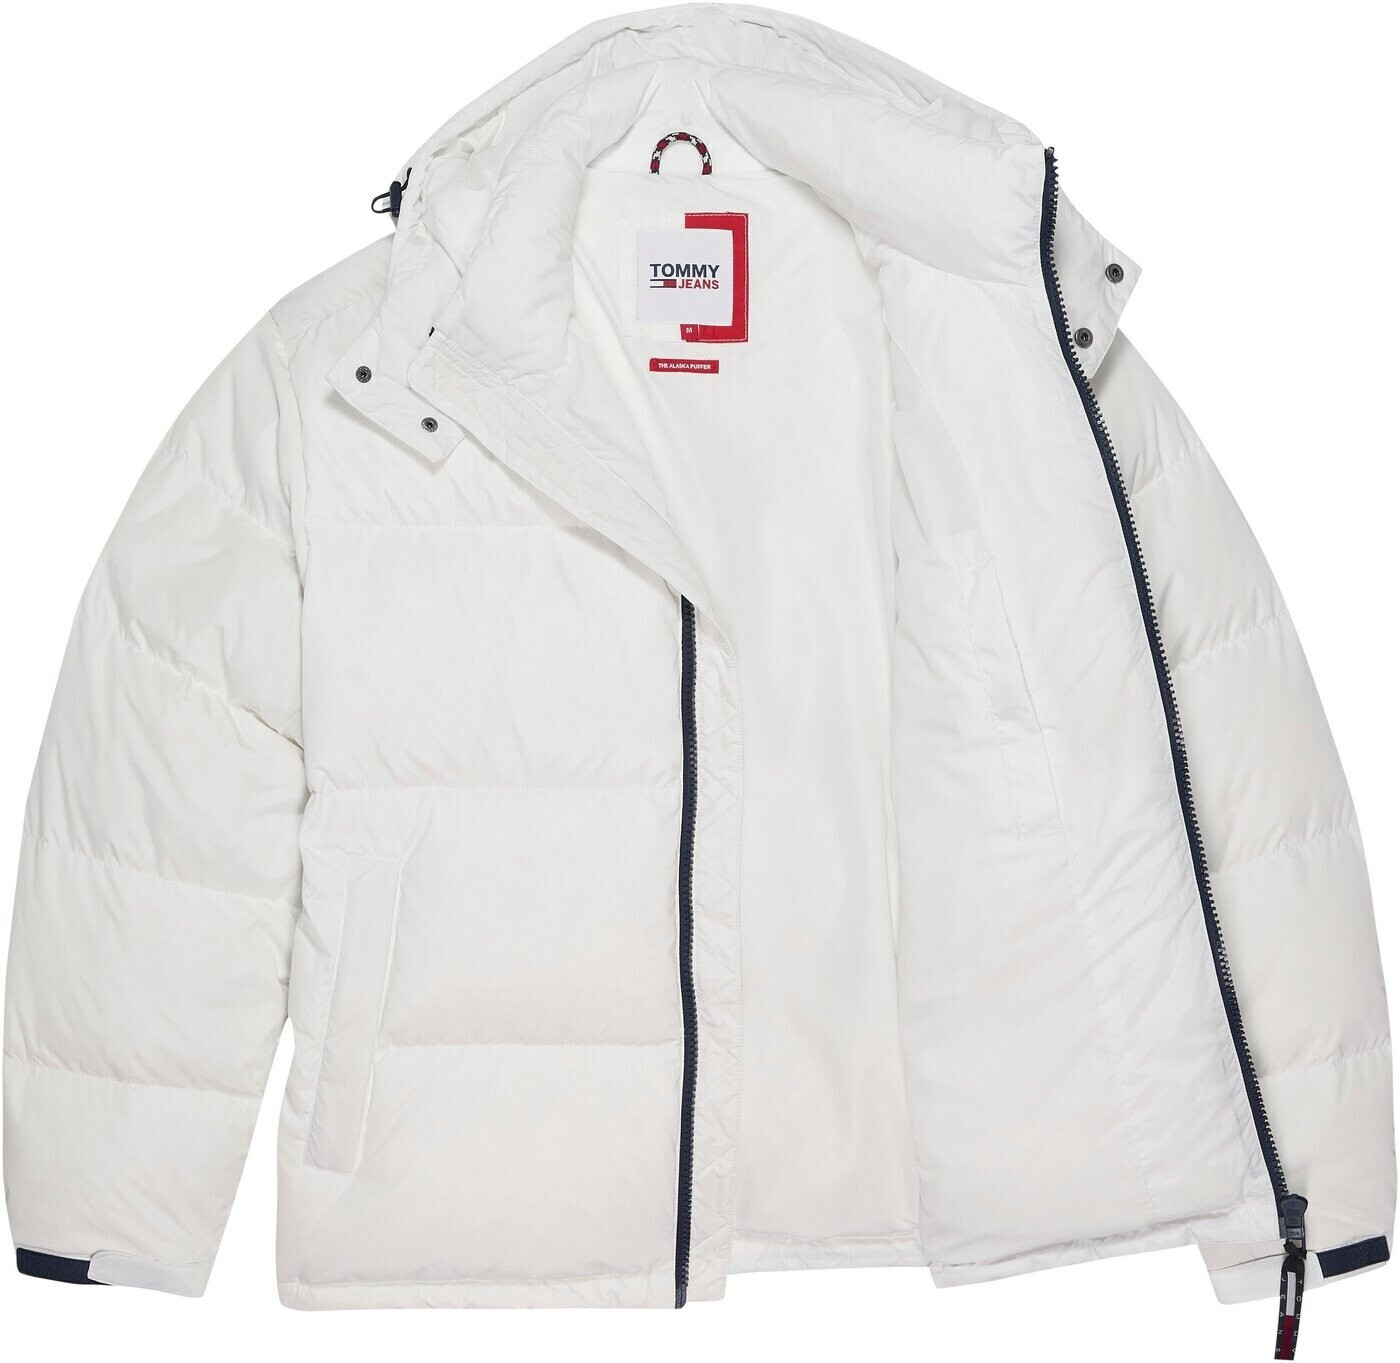 Tommy Hilfiger Removable Jacket € Puffer Alaska white 127,99 bei Preisvergleich ab | (DM0DM15445) Hood